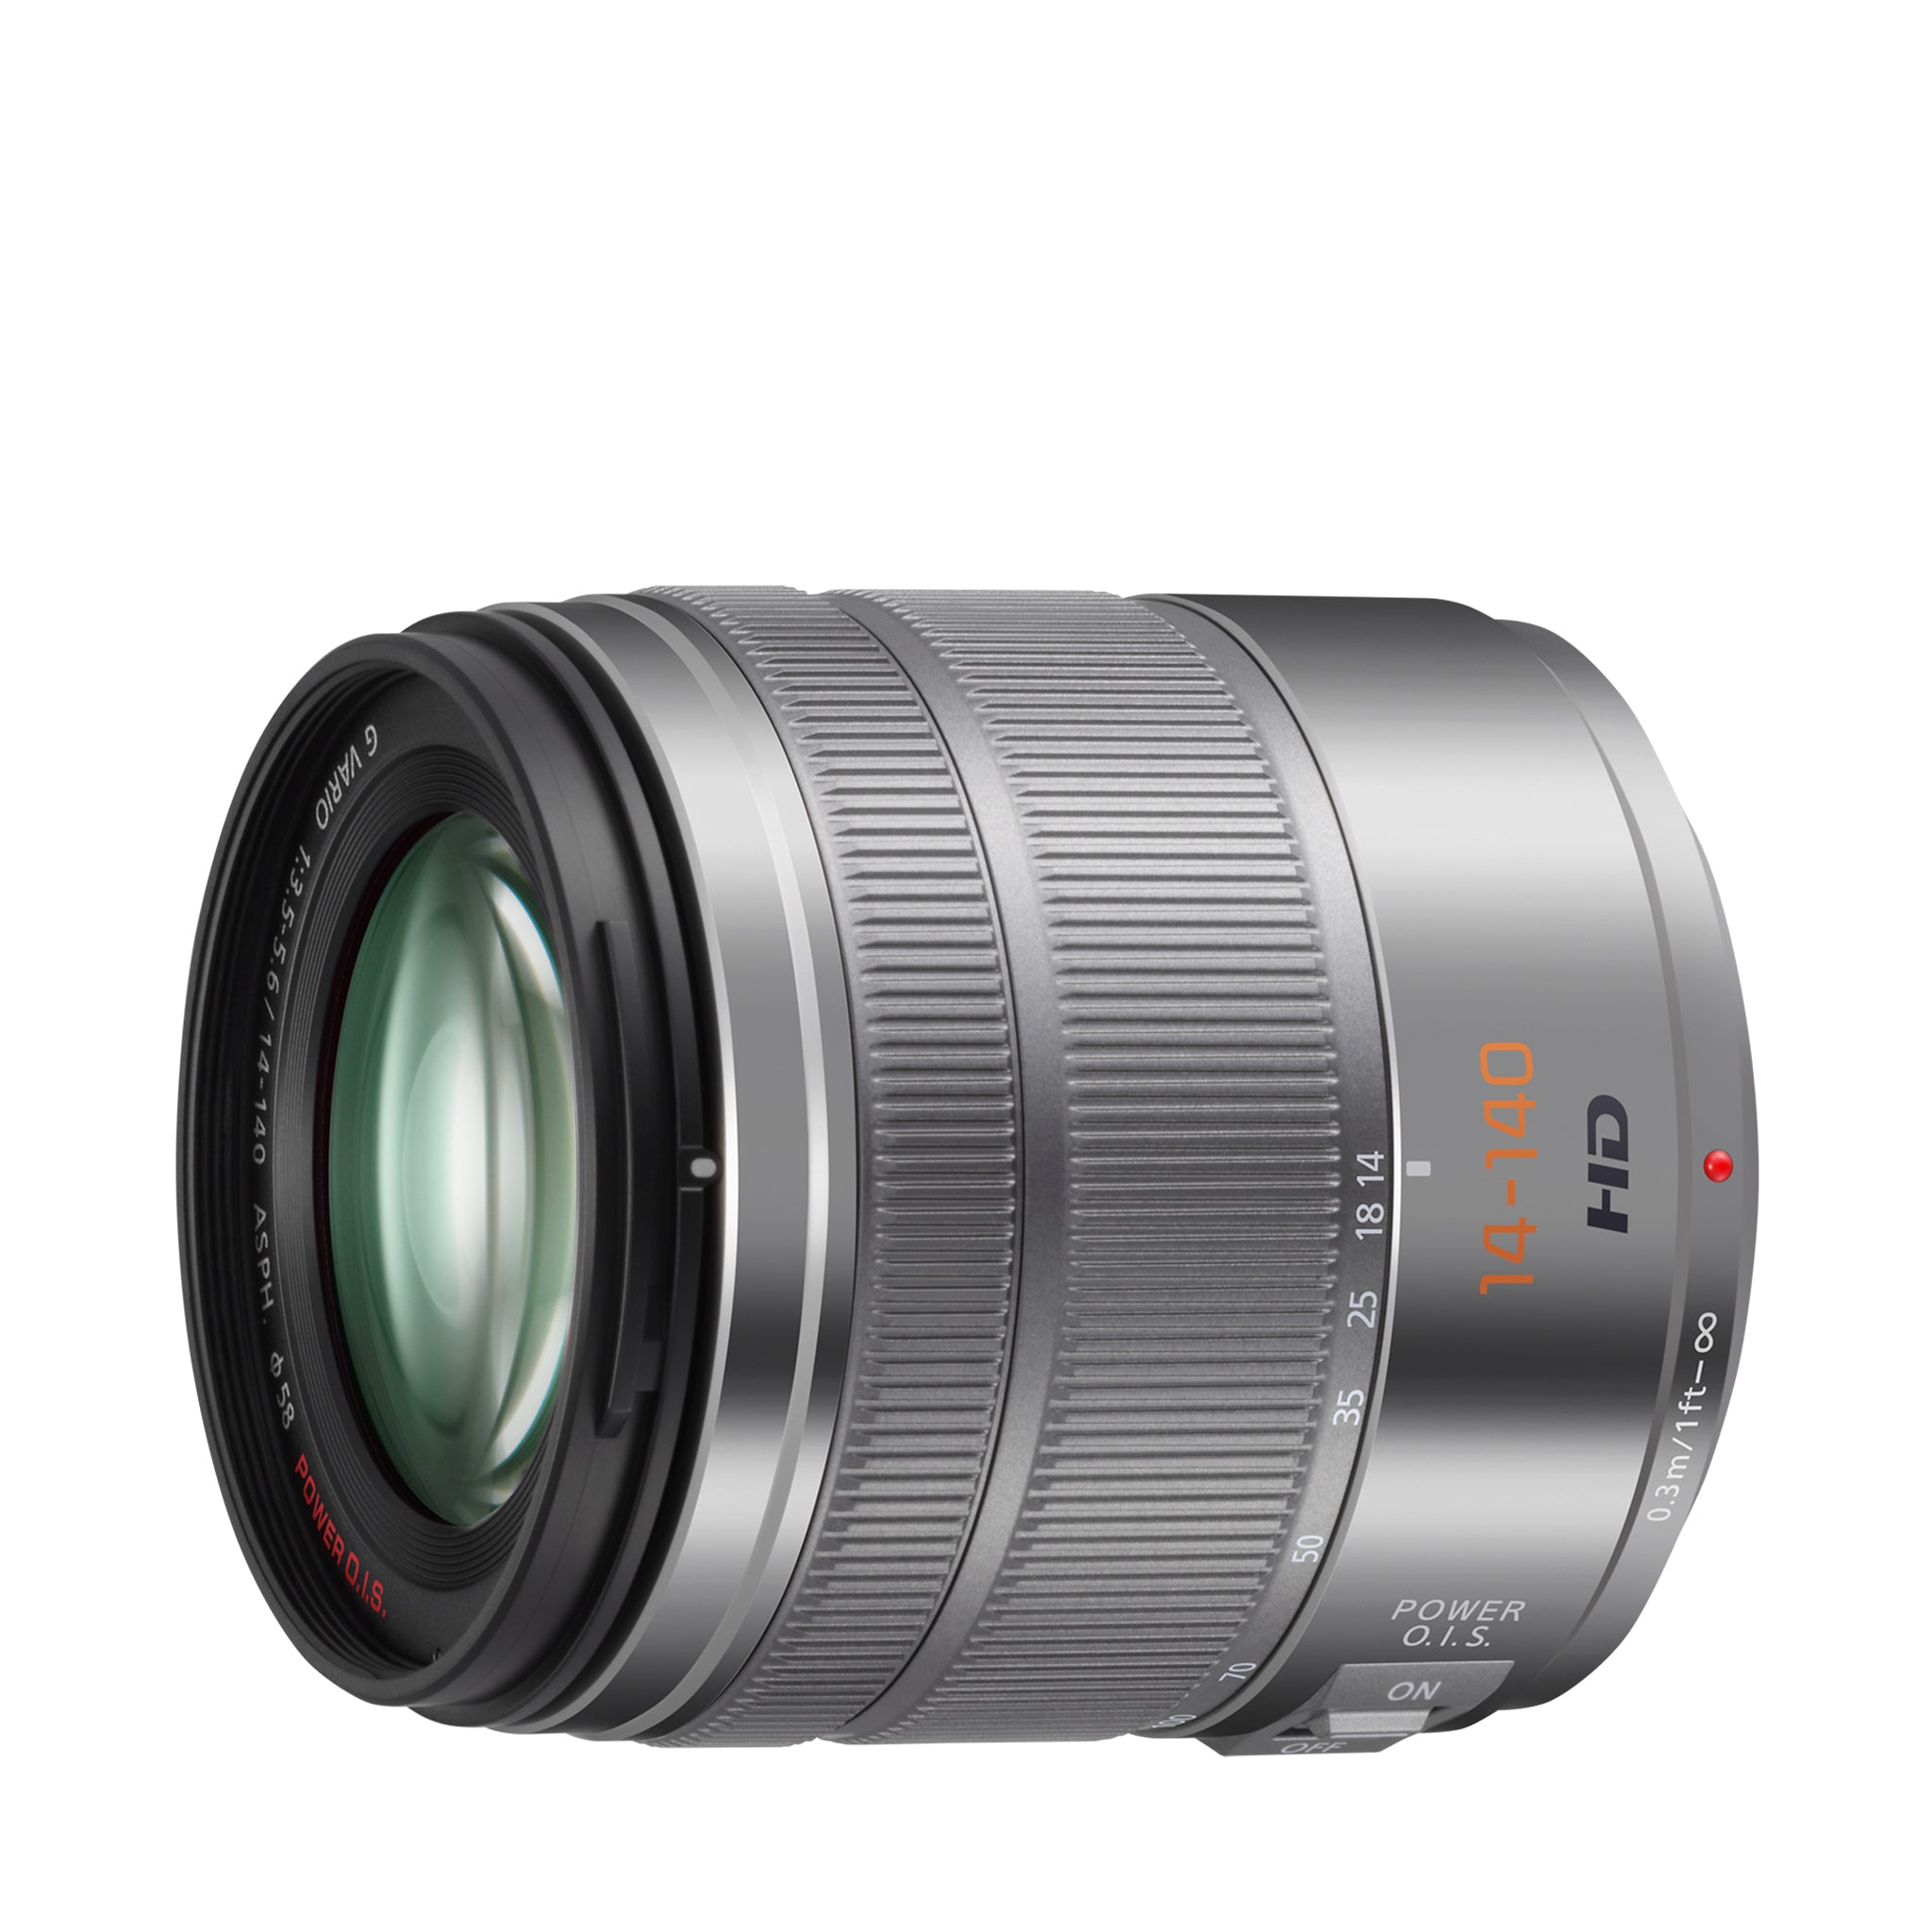 Panasonic LUMIX G Series FS14140S 14-140mm F3.5-5.6 ASPH Lens